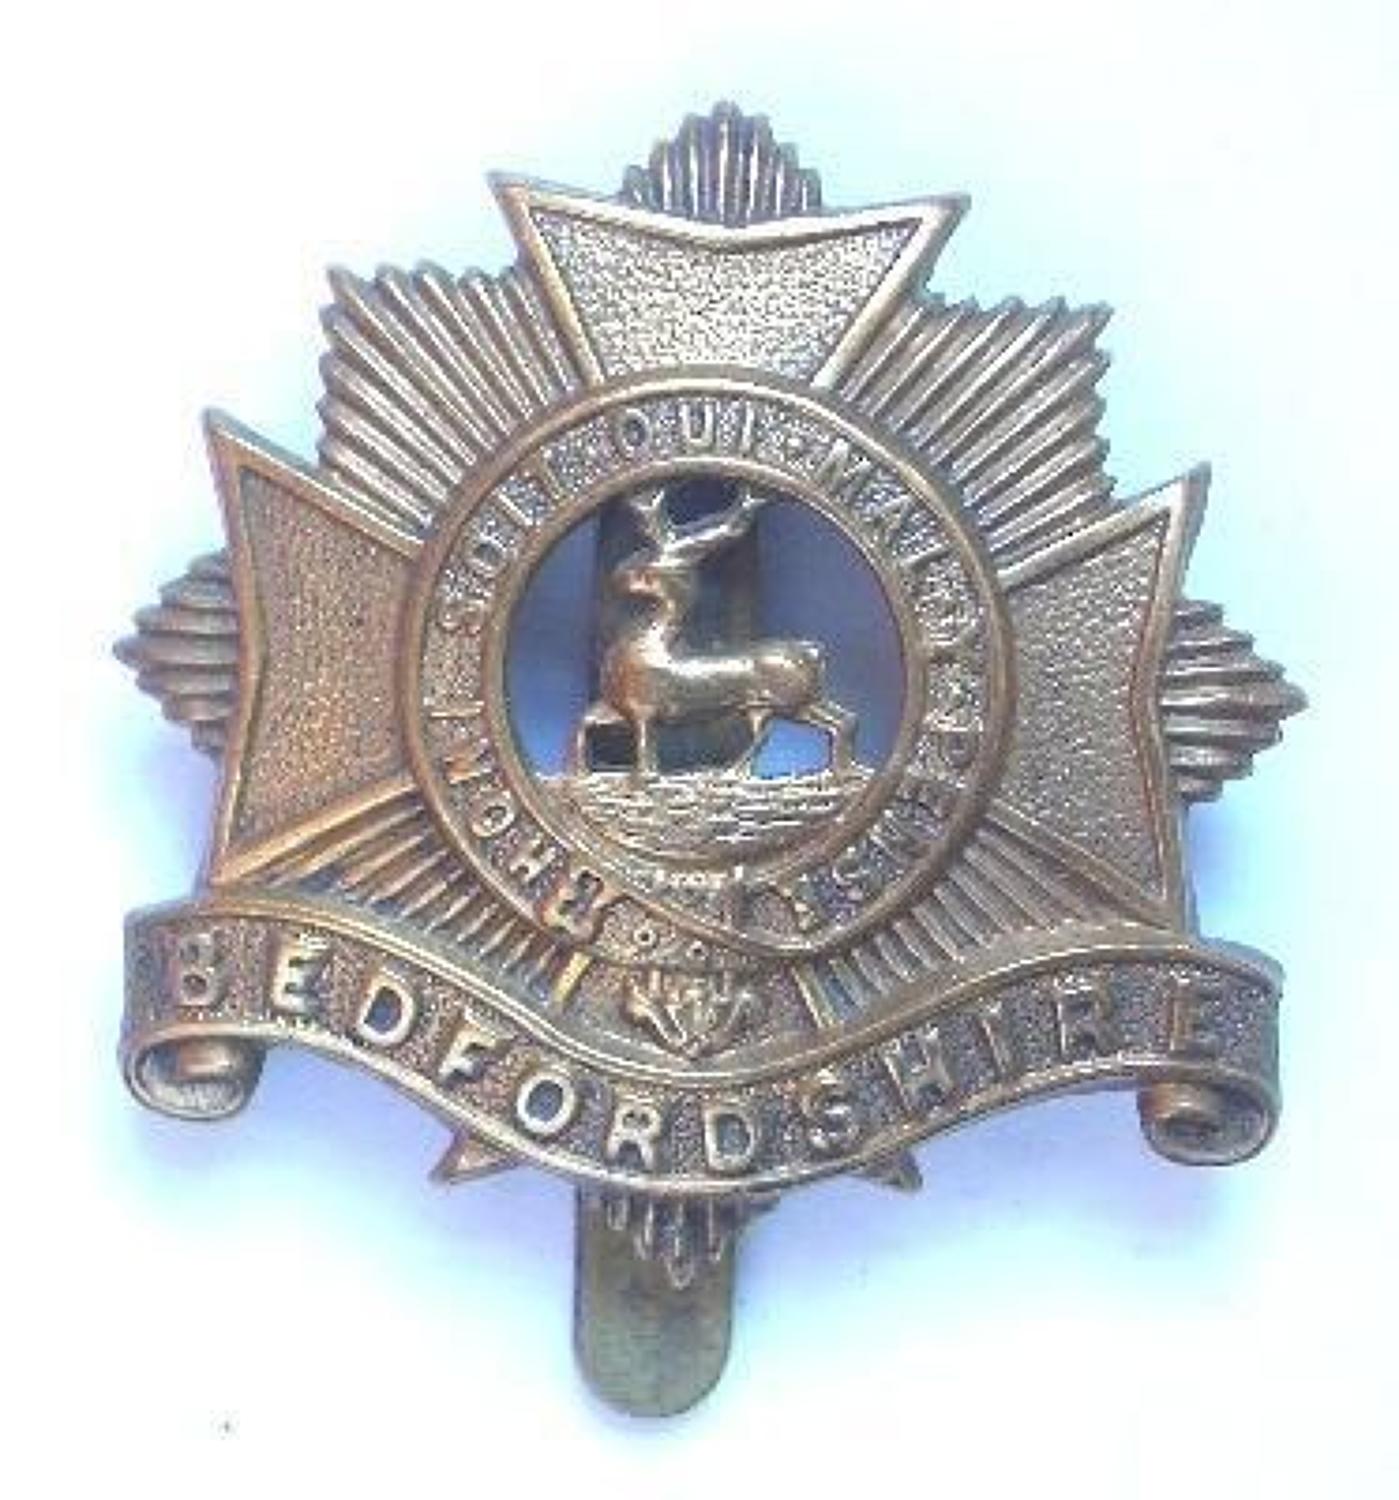 Bedfordshire Regiment 1916 all brass economy cap badge.